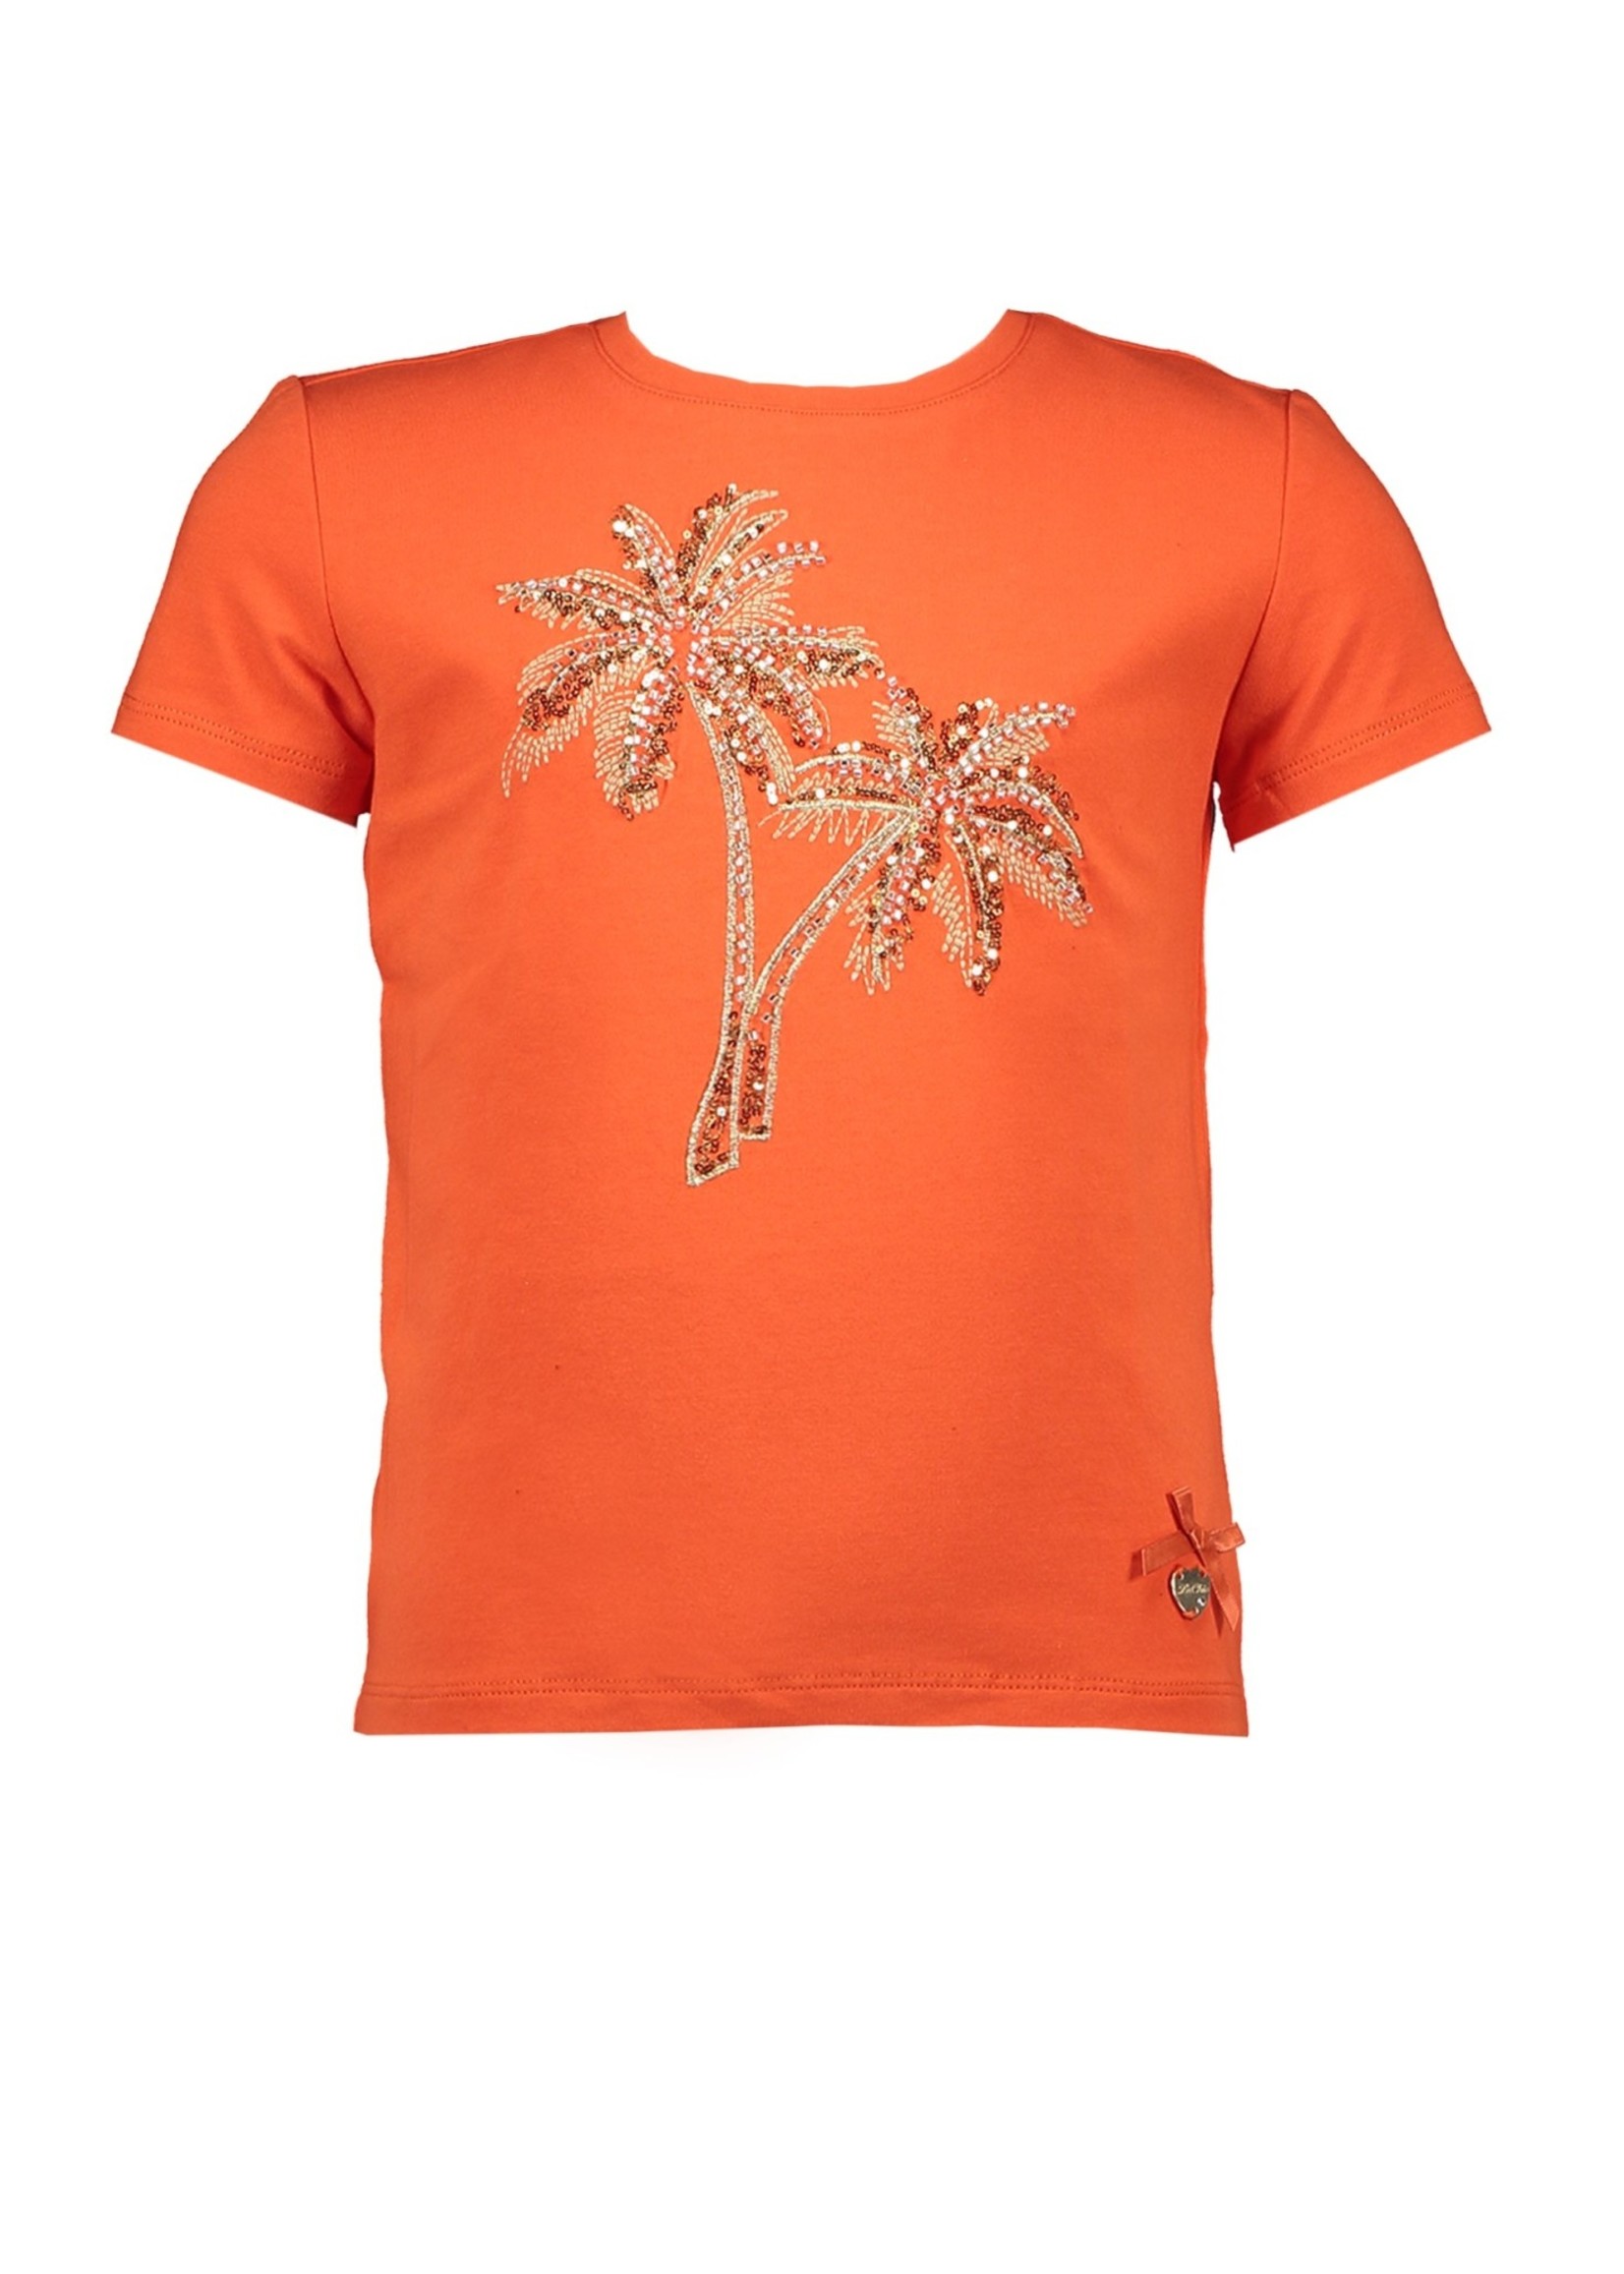 Le Chic Orange T-shirt palmtree embroidery